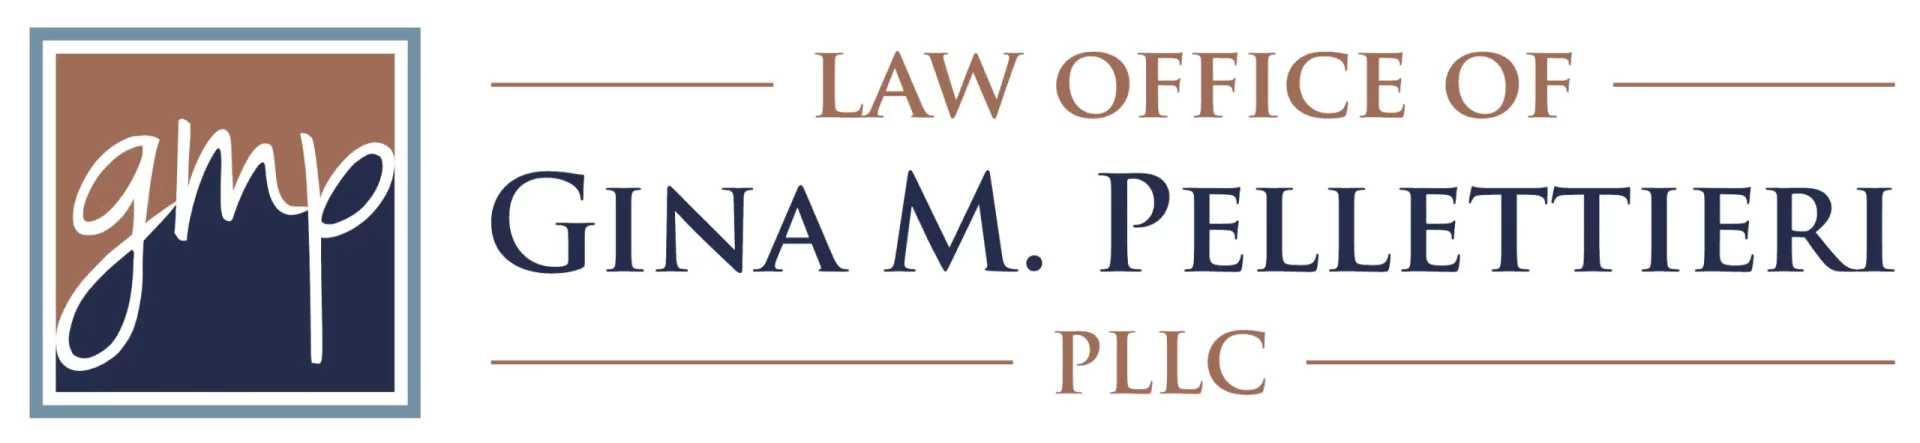 Law Office of Gina M. Pellettieri, PLLC